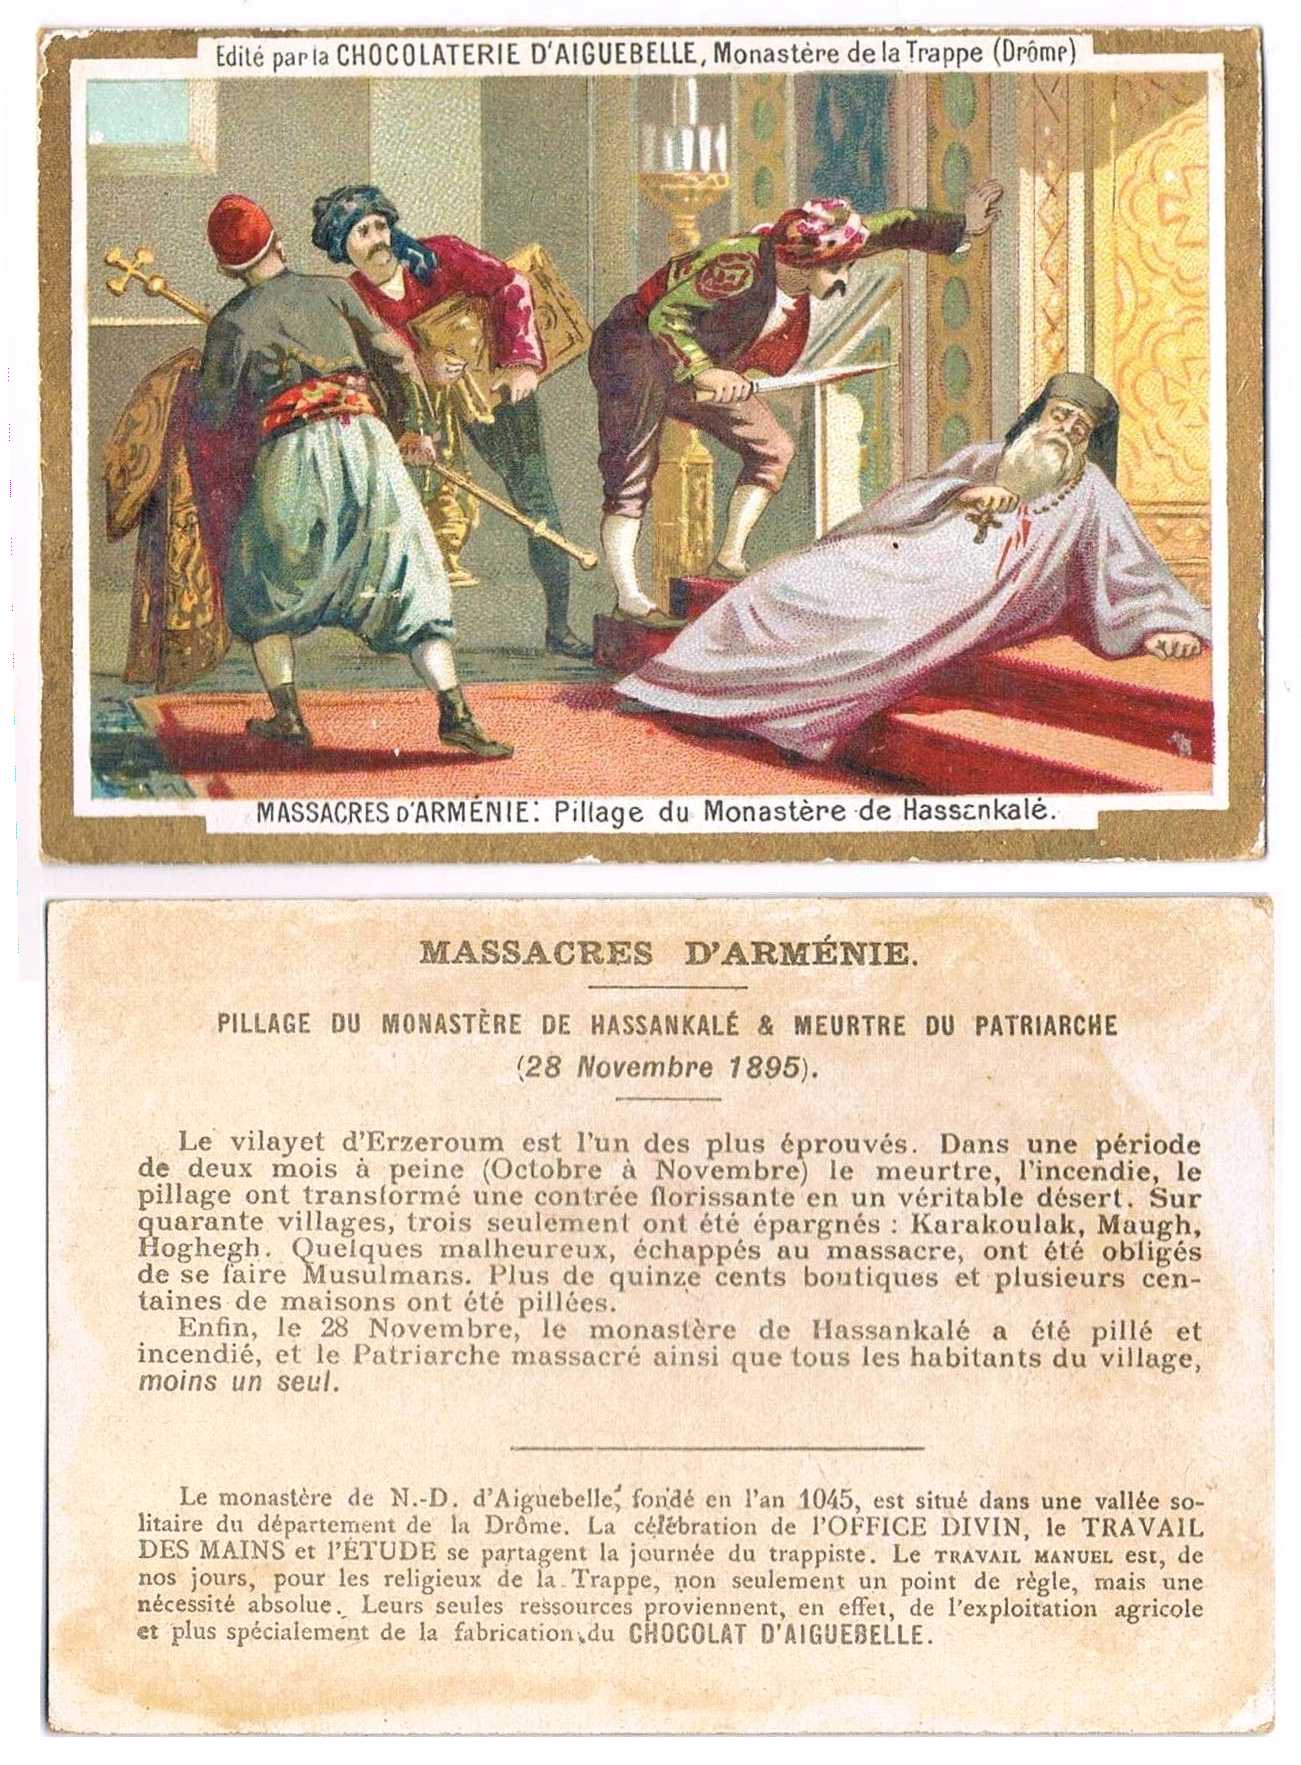 1895 Massacre d'Armenie, Chromo, Chocolaterie d'Aiguebelle 18 11 1895